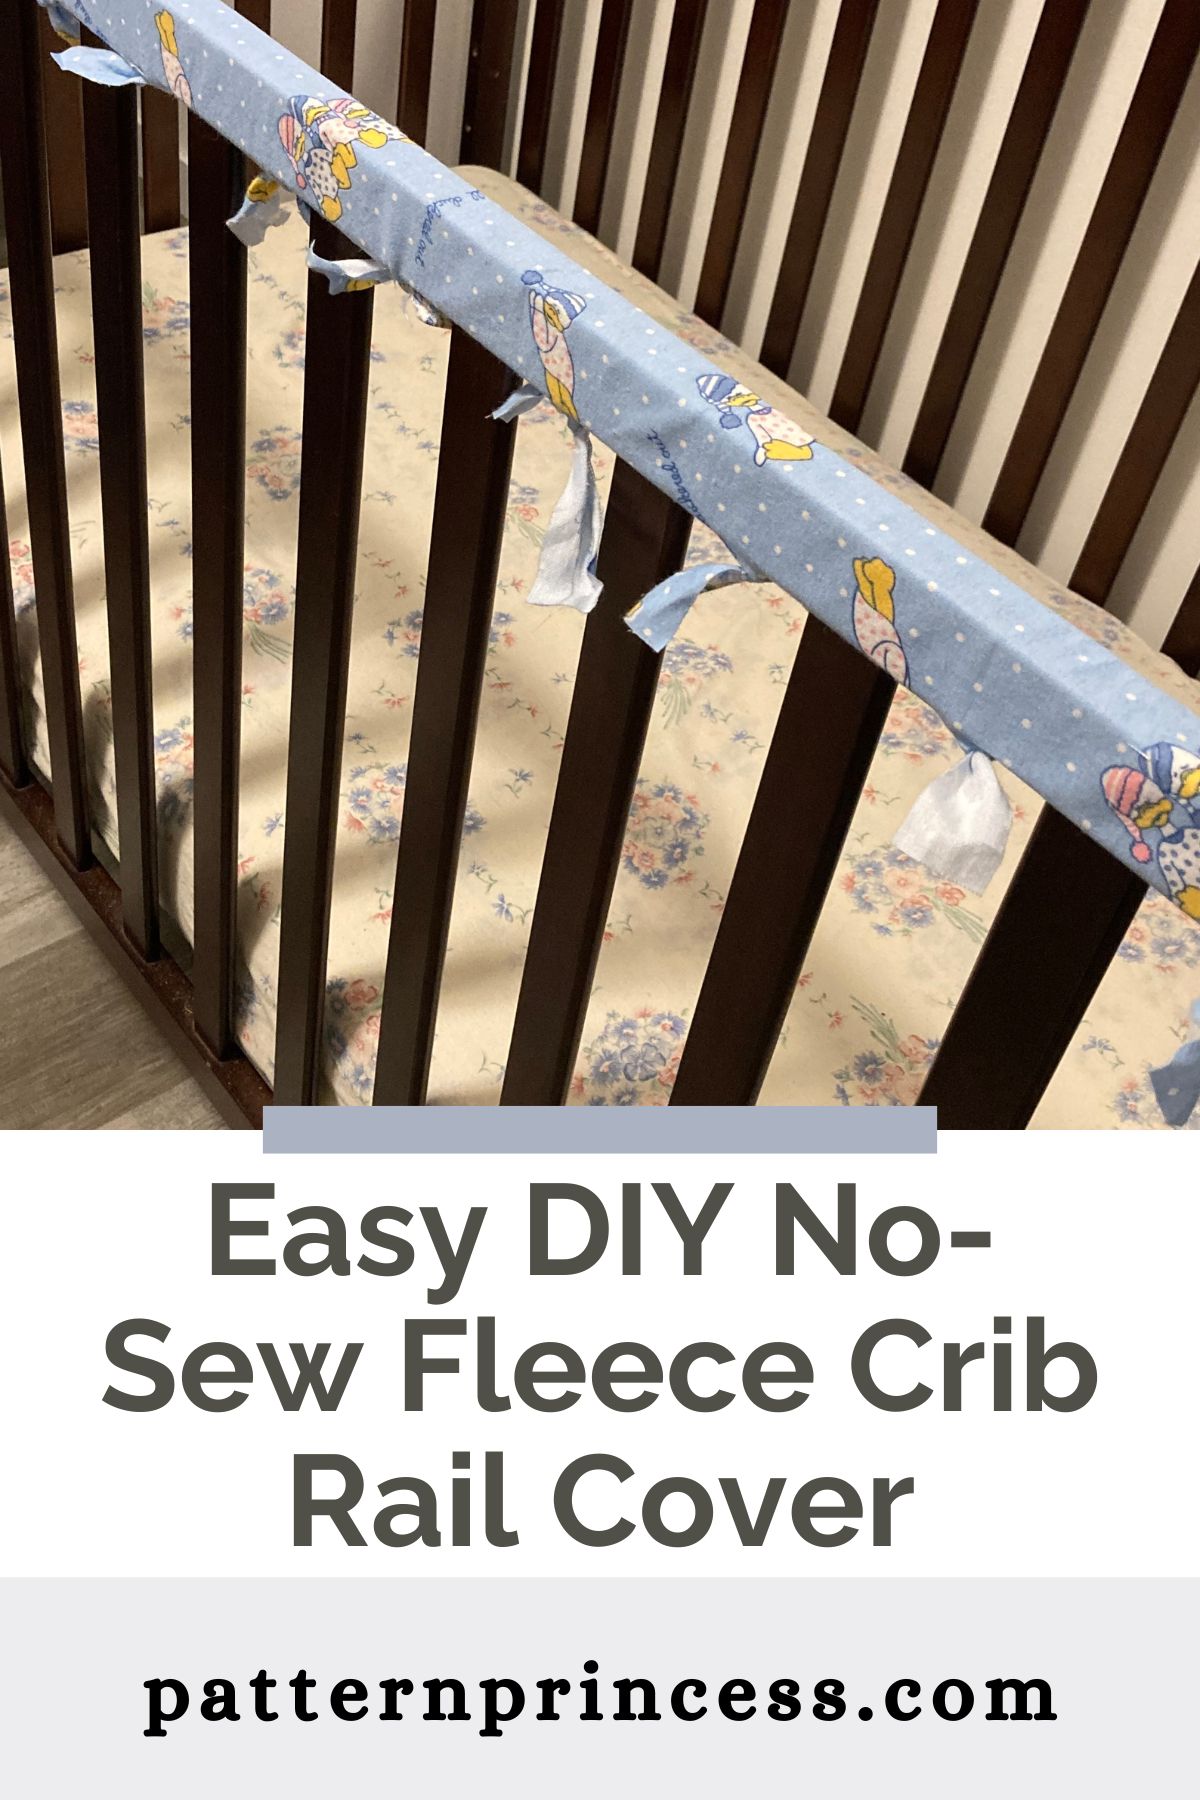 Easy DIY No-Sew Fleece Crib Rail Cover